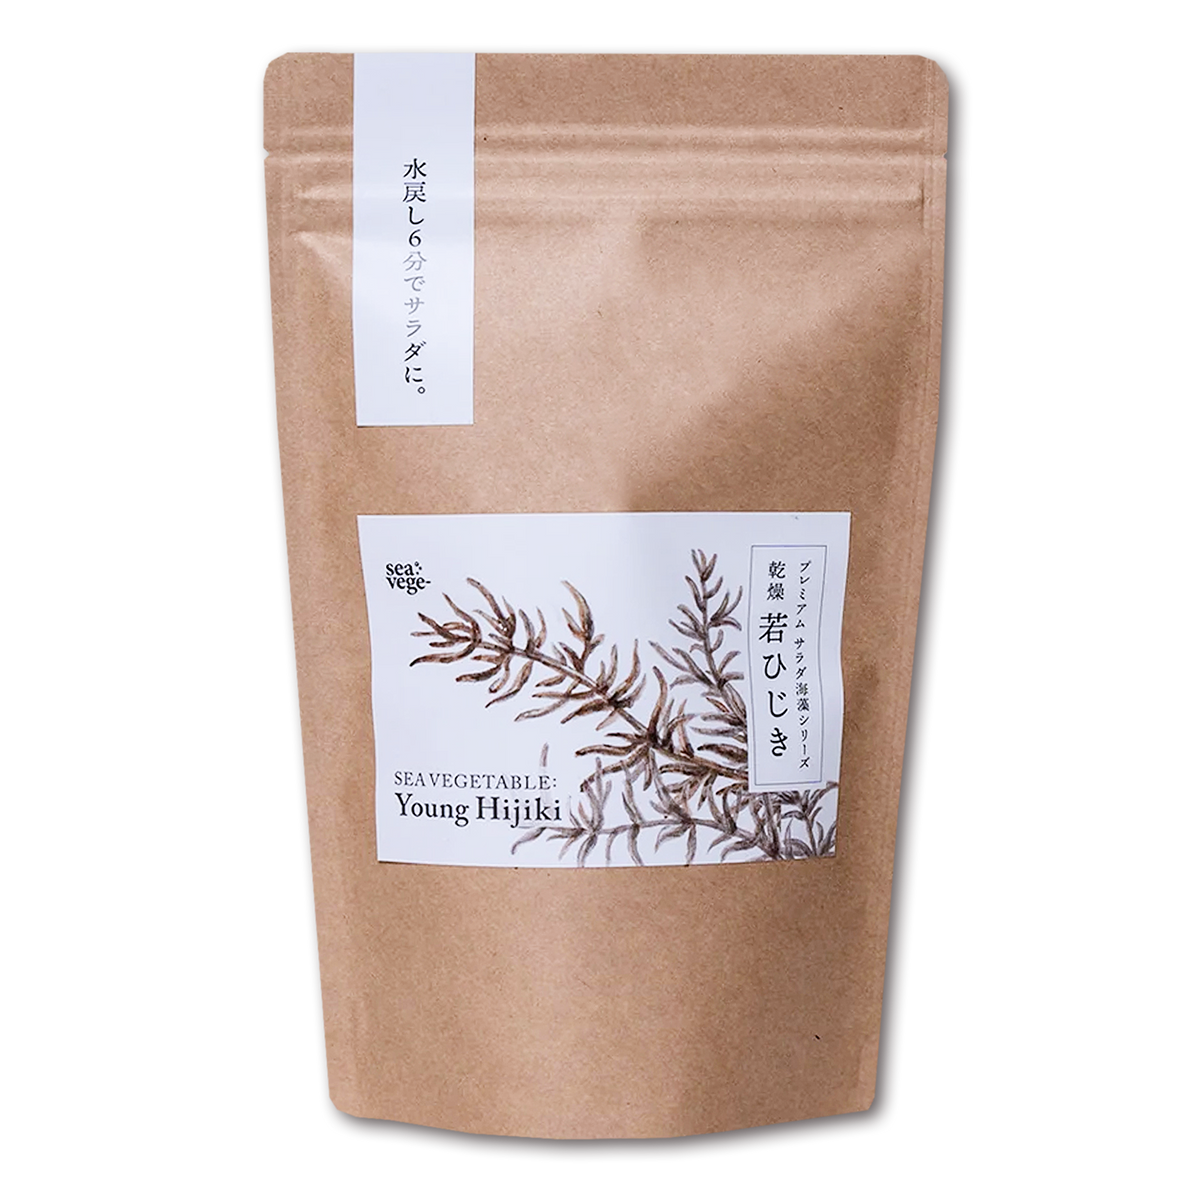 All-Natural Additive-Free Premium Dried "Hijiki" Seaweed from Japan (27g x 2) - Horizon Farms